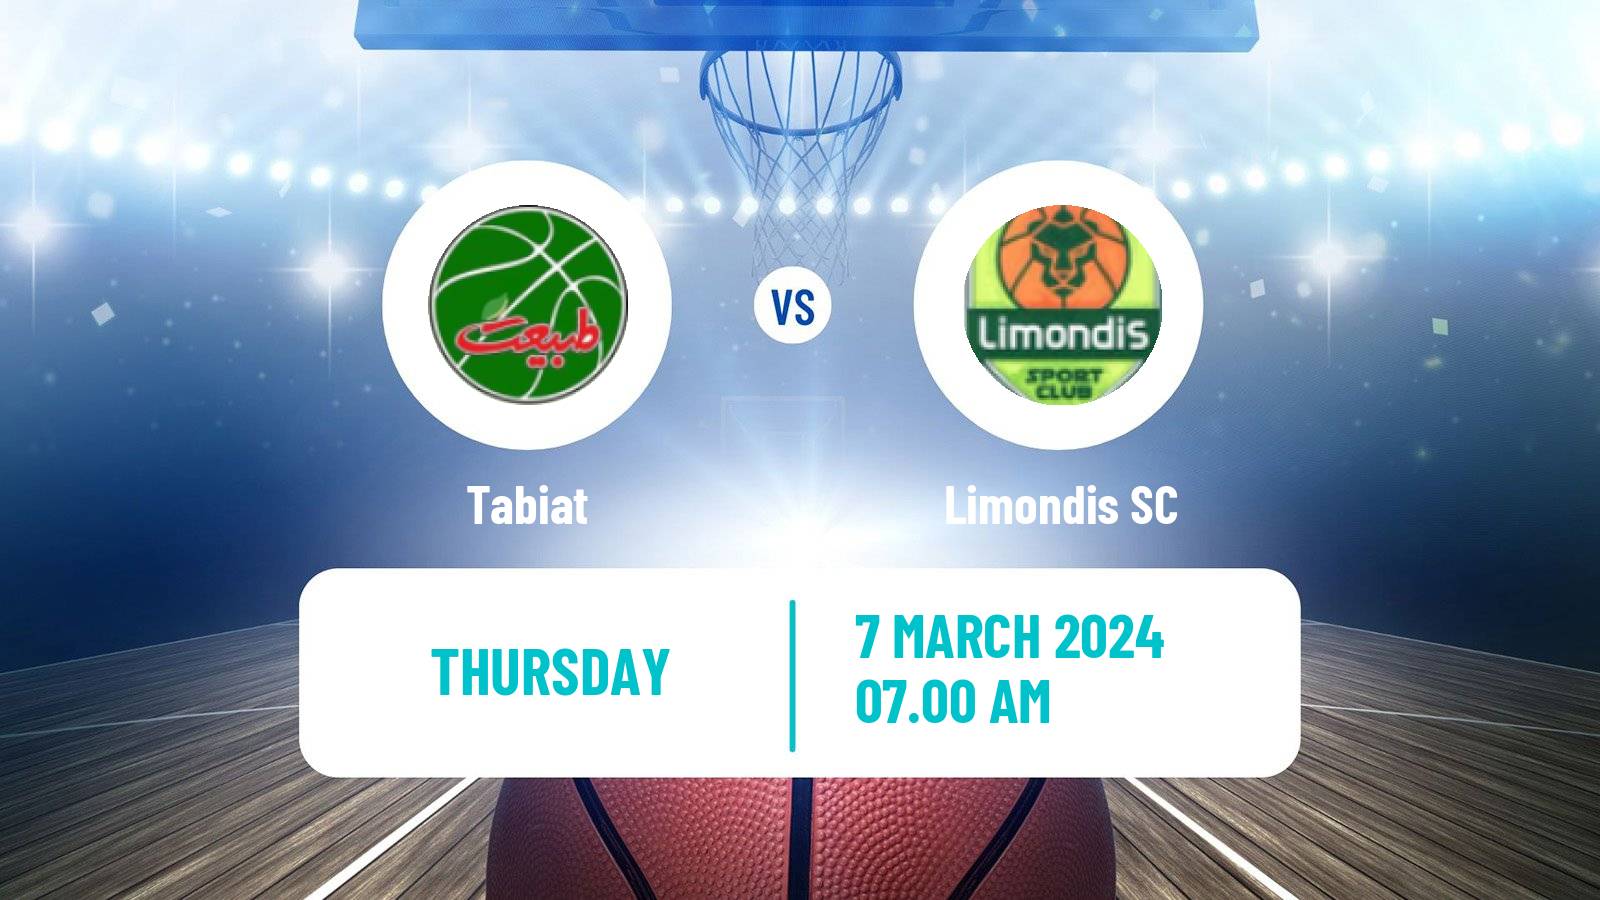 Basketball Iran Super League Basketball Tabiat - Limondis